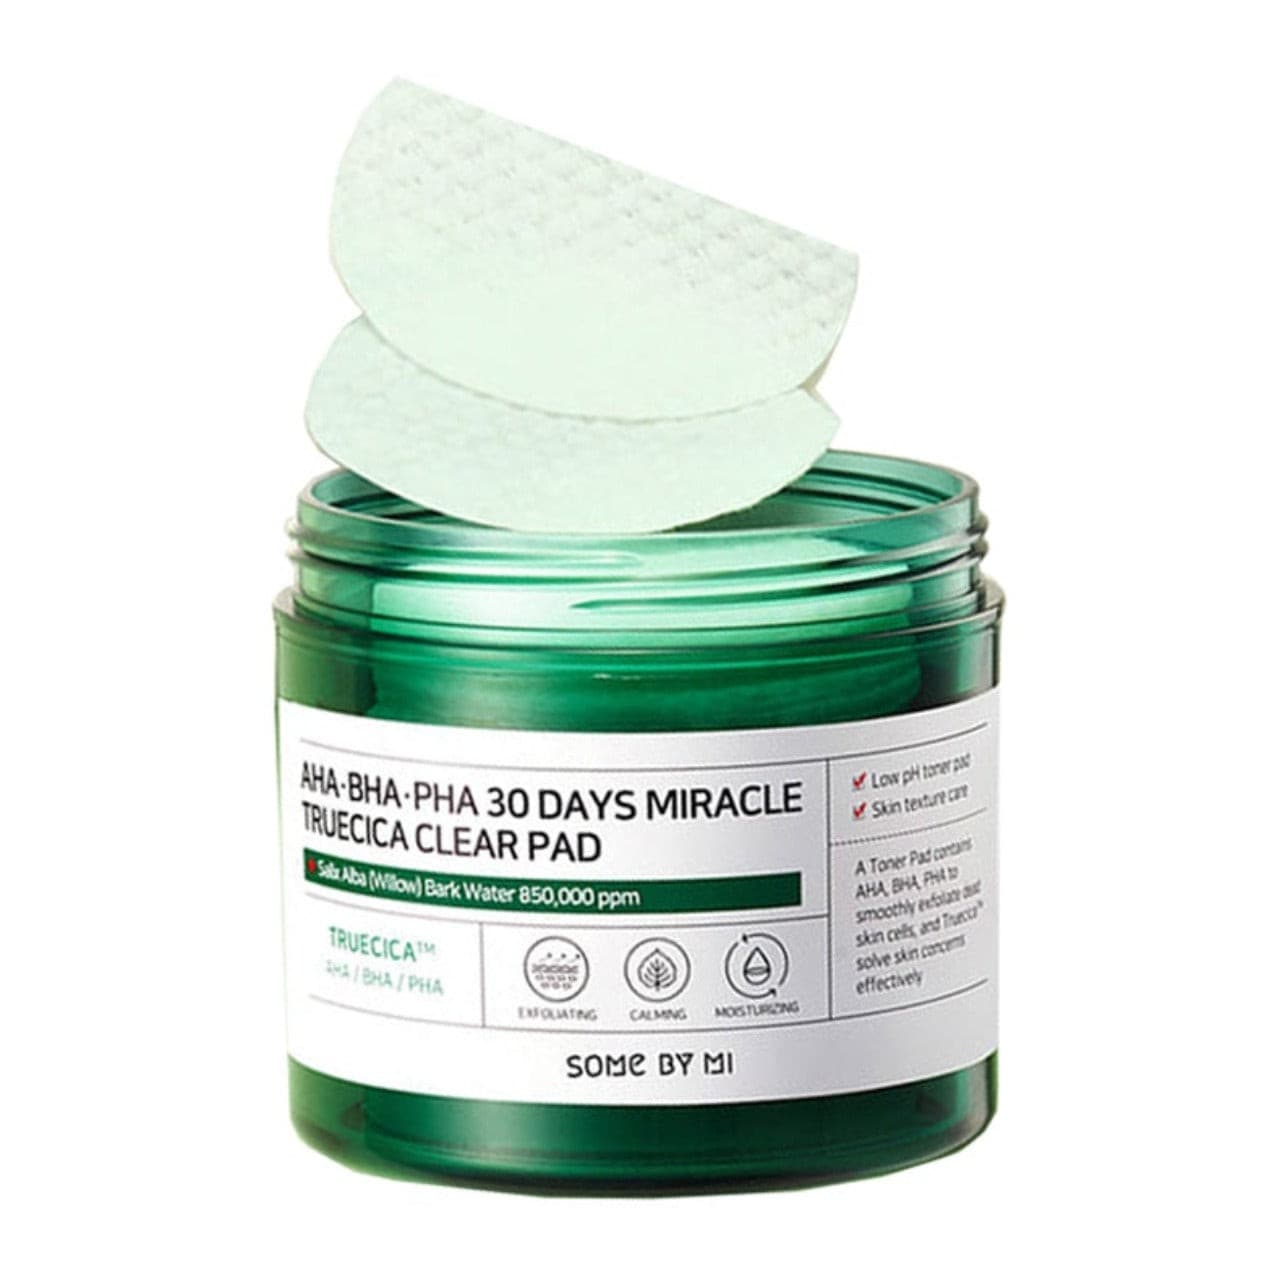 AHA BHA PHA 30 Days Miracle Truecica Clear Pad | Almohadillas anti acne 70pz - Koelleza Store